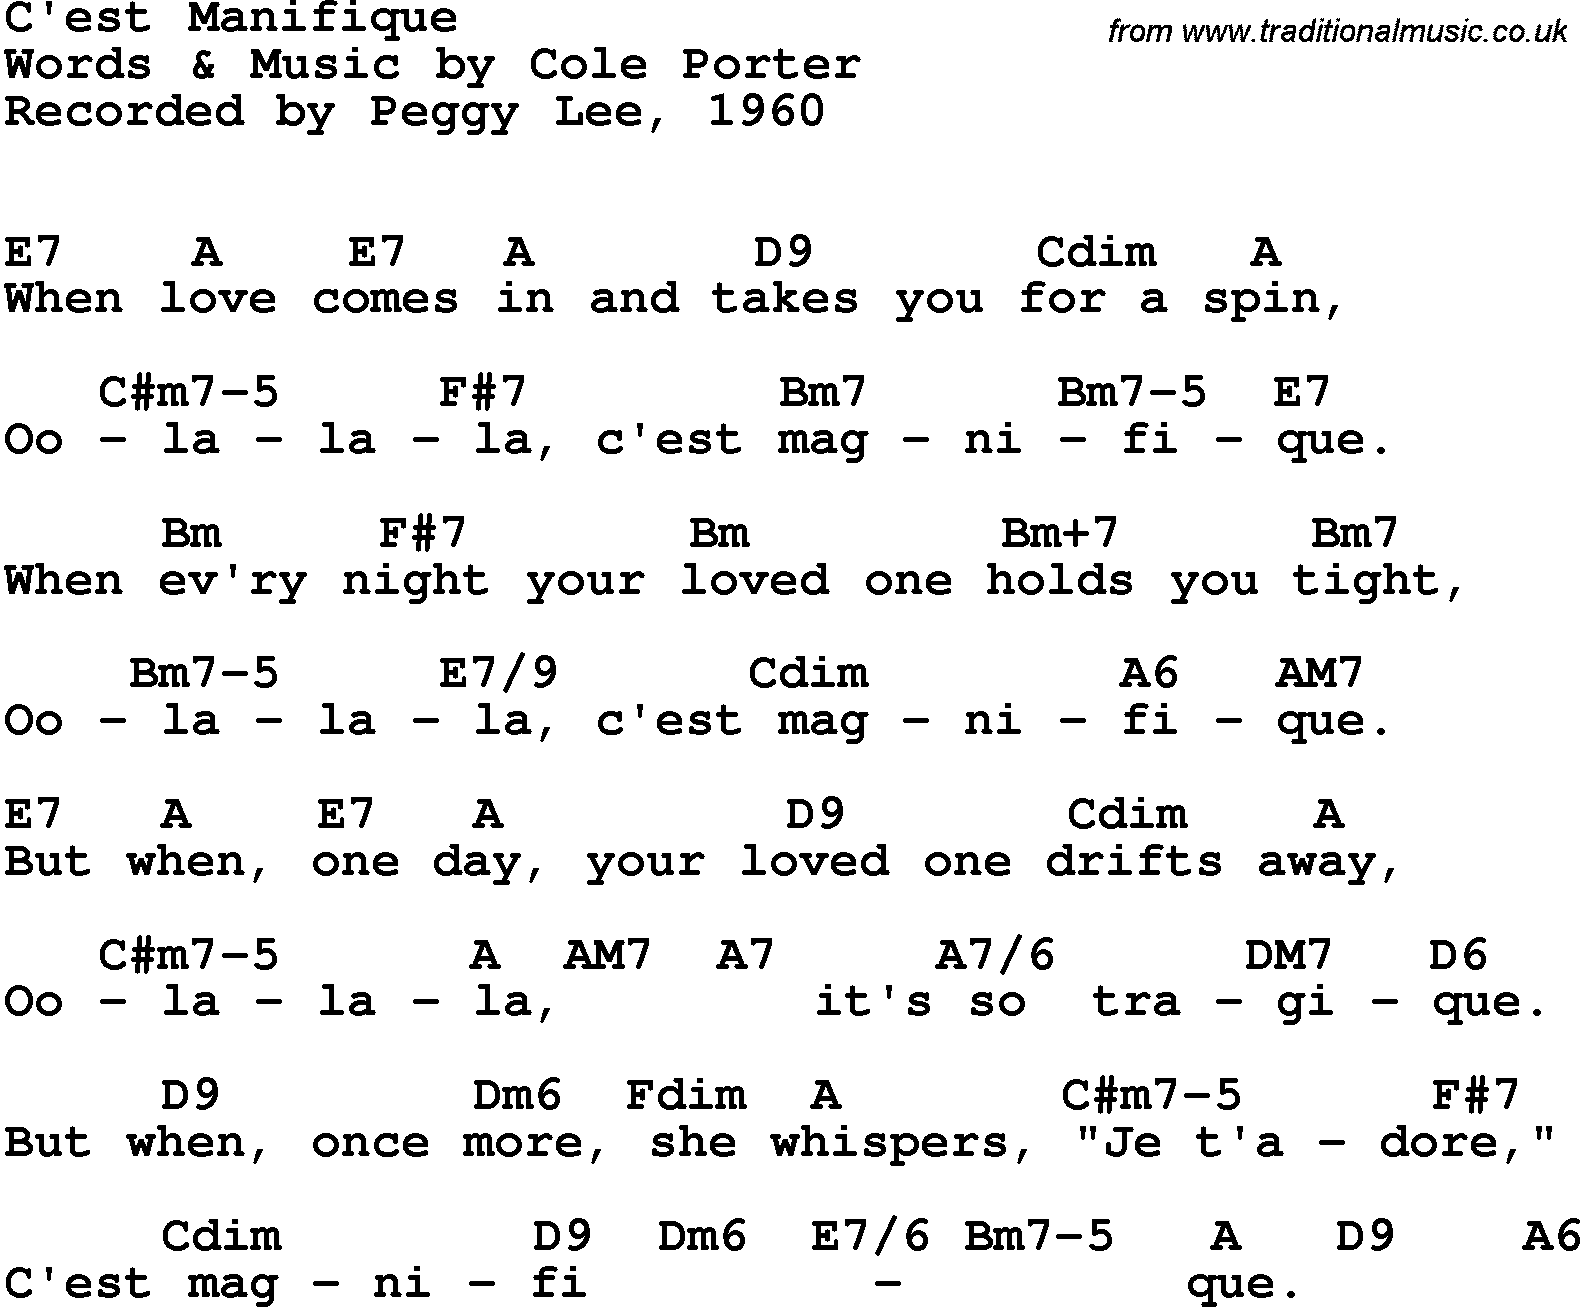 Song Lyrics with guitar chords for C'est Magnifique - Peggy Lee, 1960